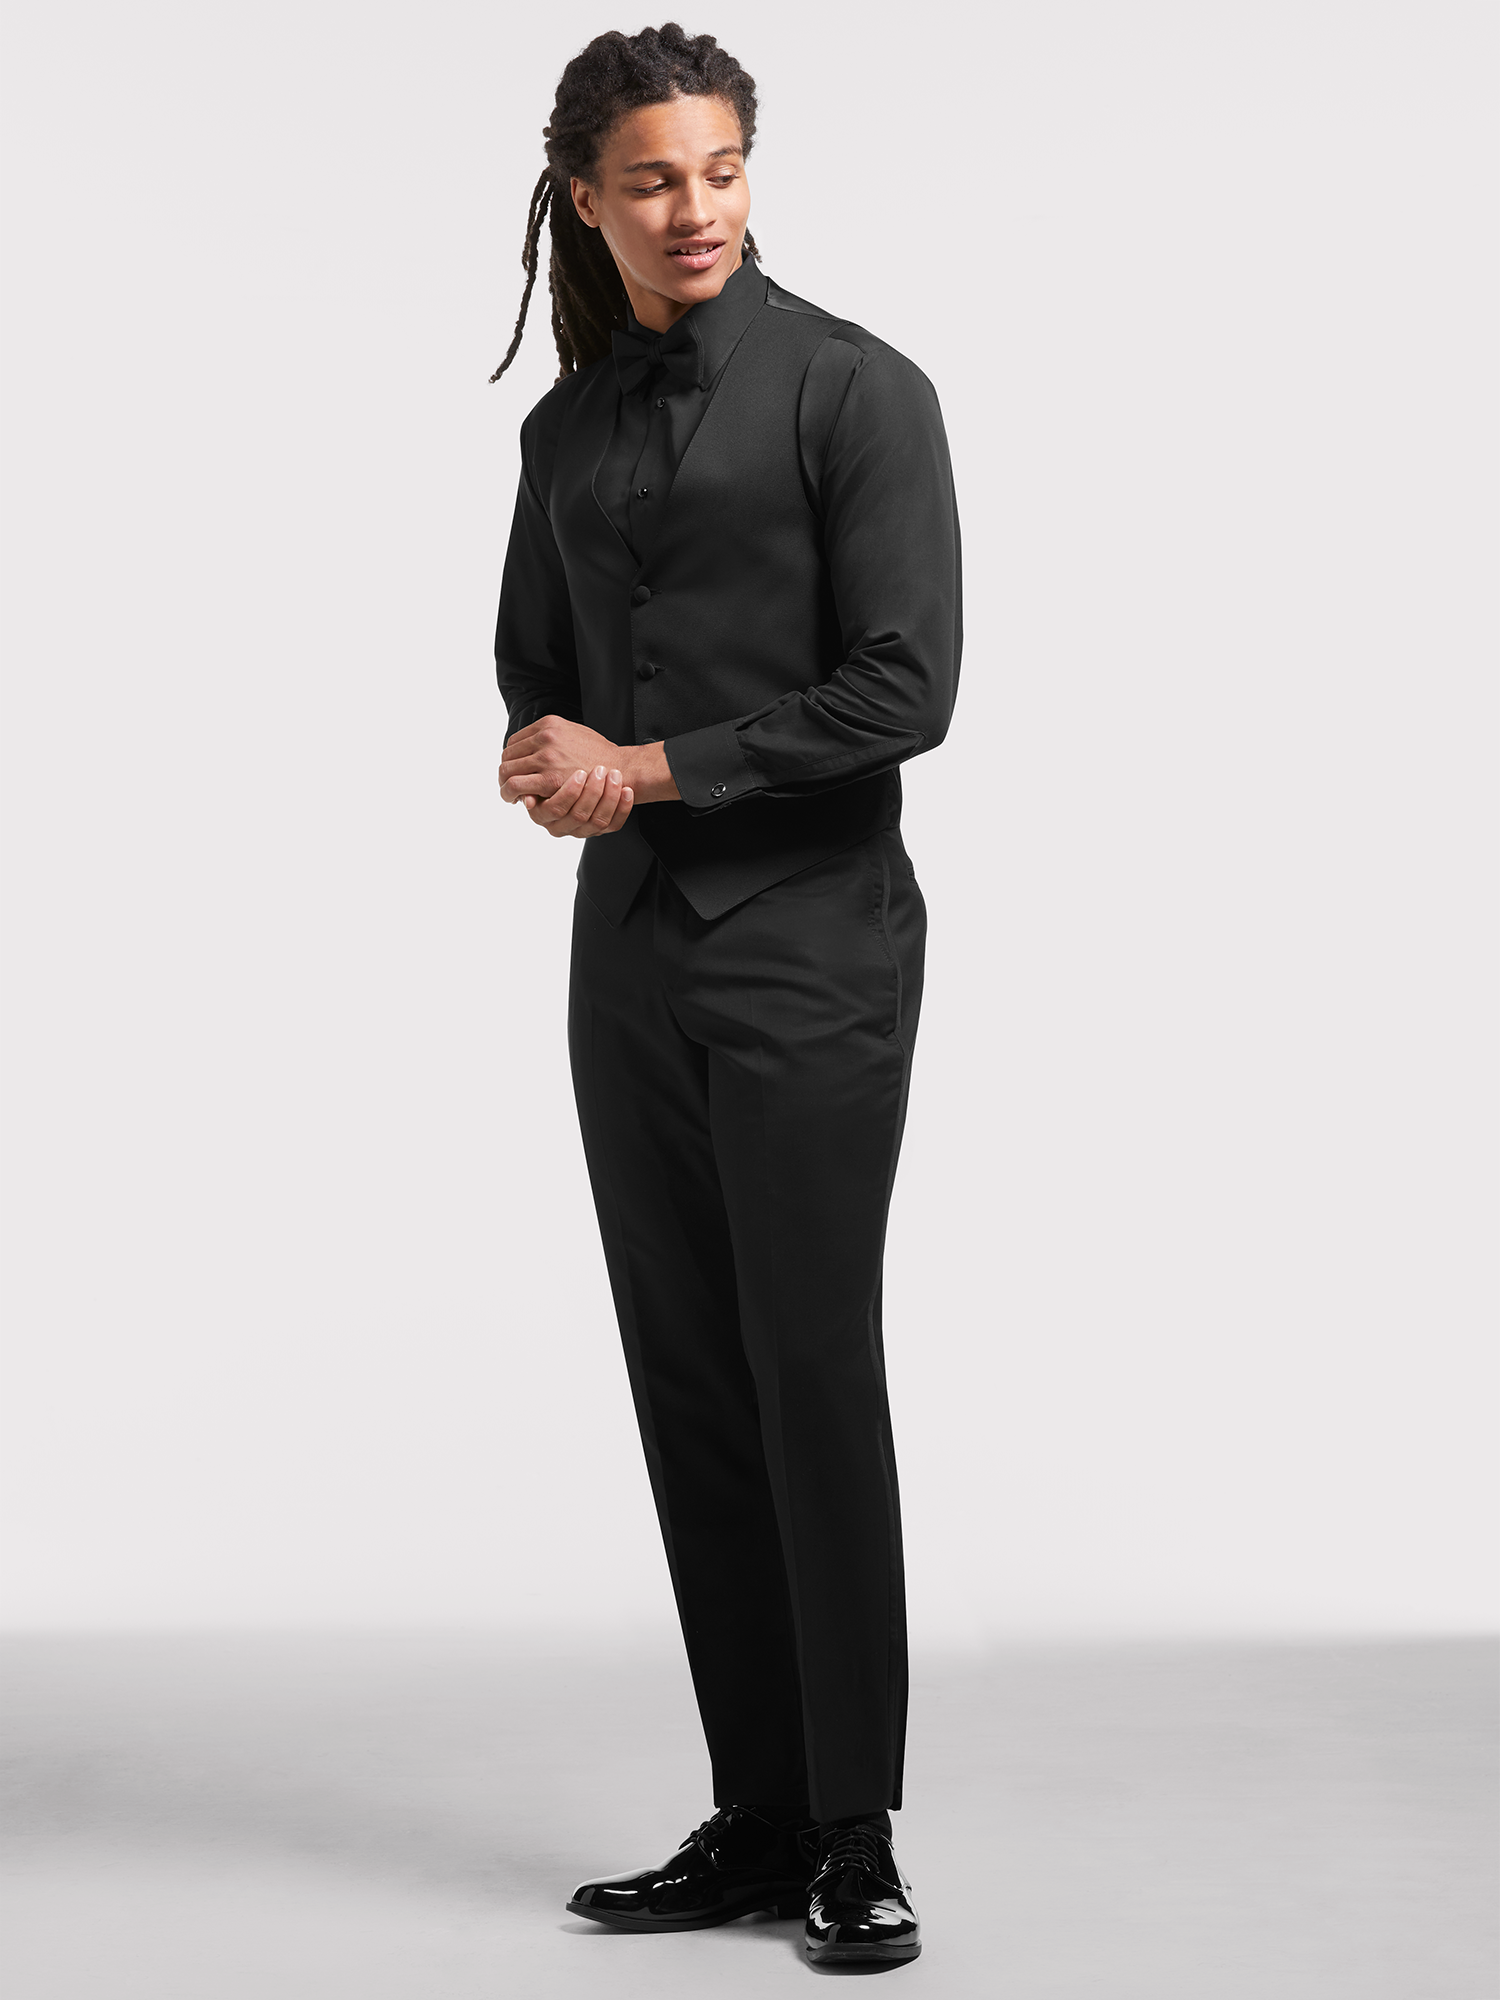 Black Tuxedo | BLACK by Vera Wang Tuxedo | Tuxedo Rental | Moores Clothing